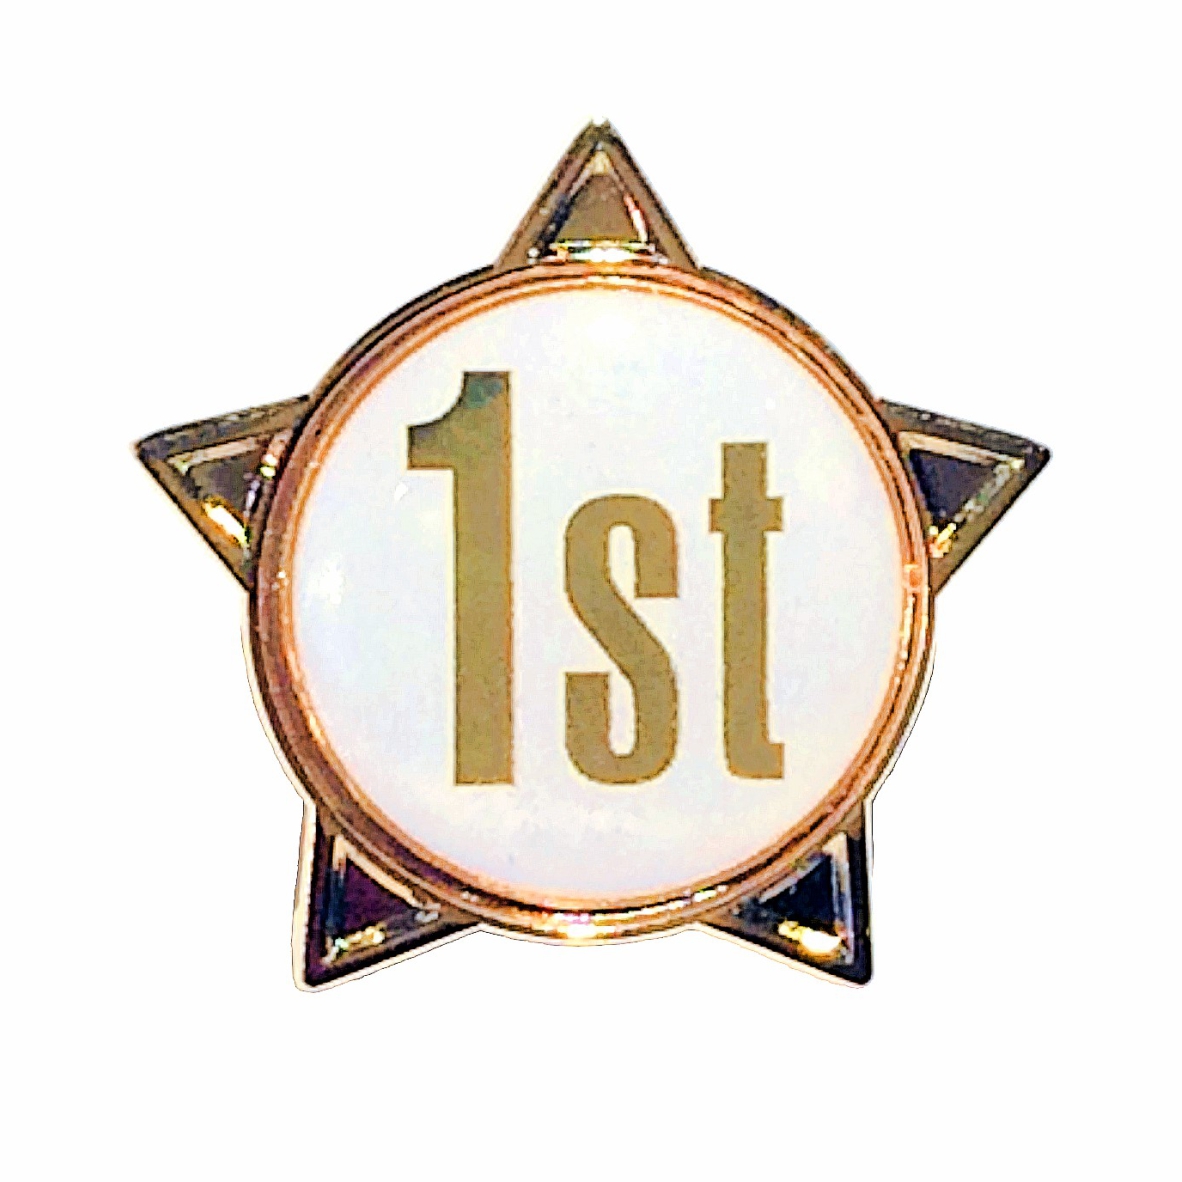 1st titled star shape badge